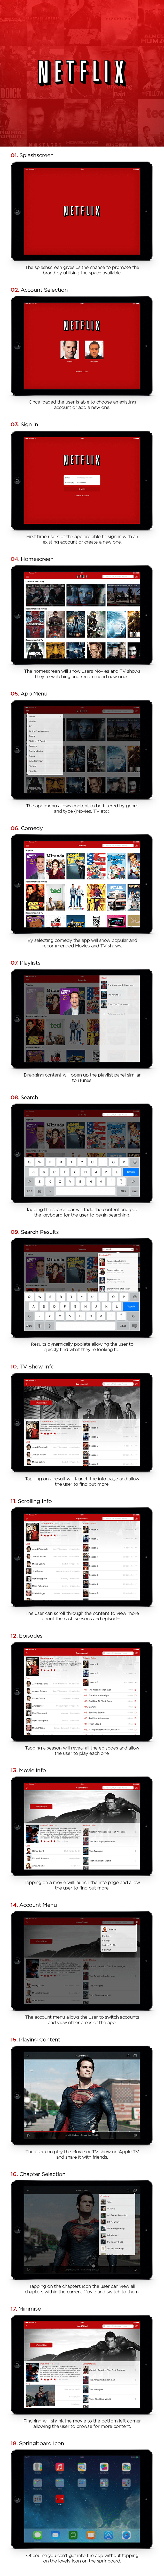 Netflix ios7 iPad redesign Movies TV shows